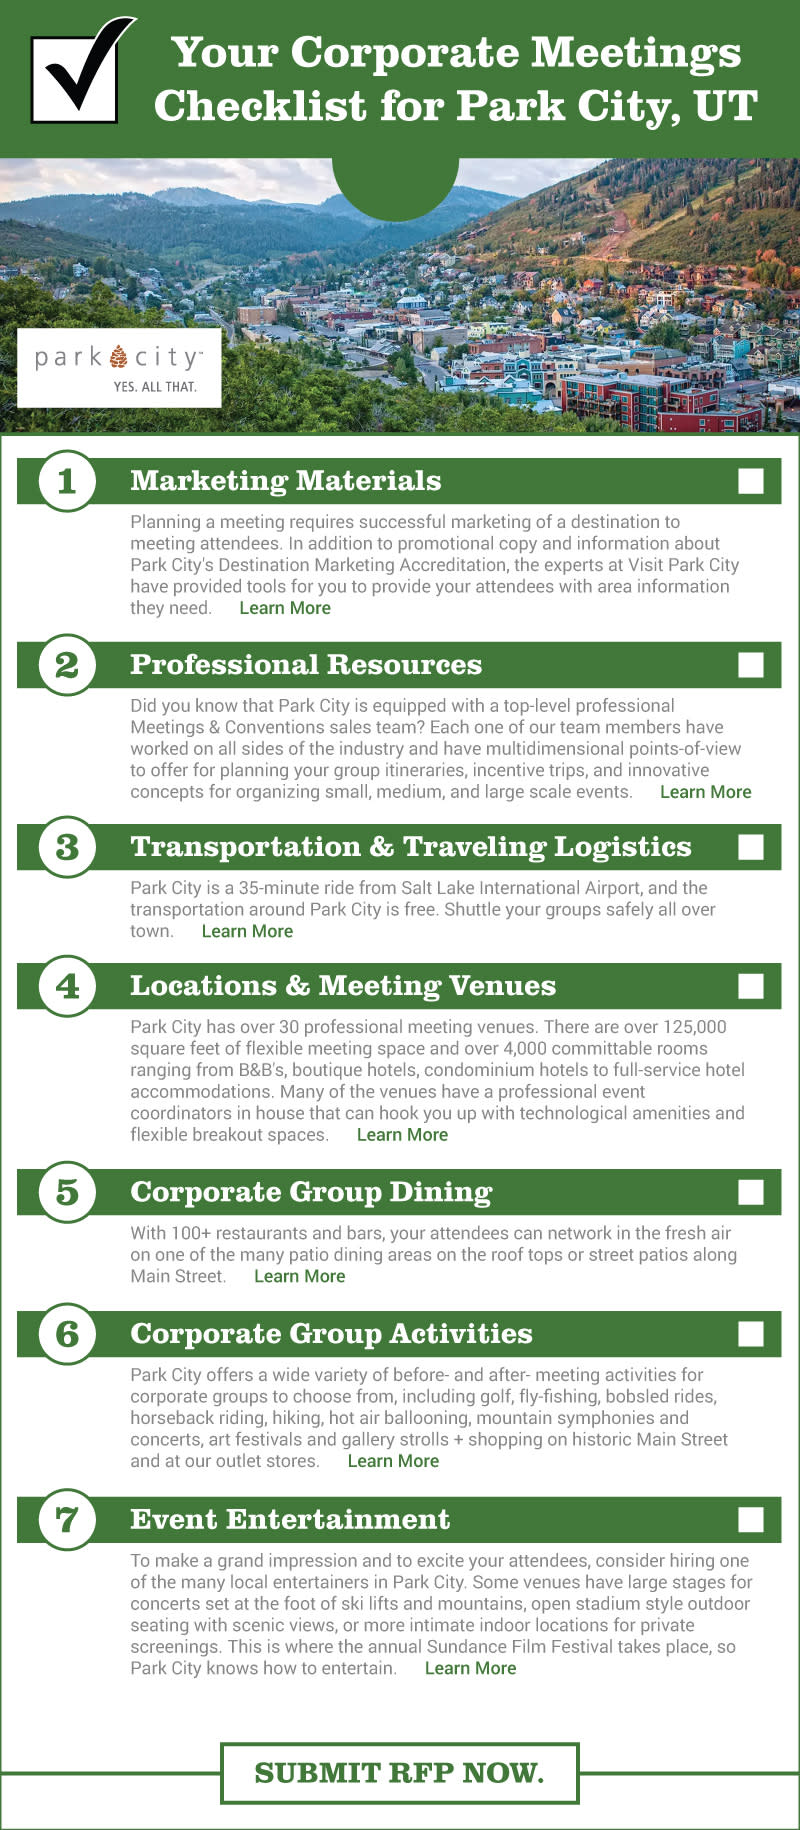 Park City Corporate Meetings Checklist